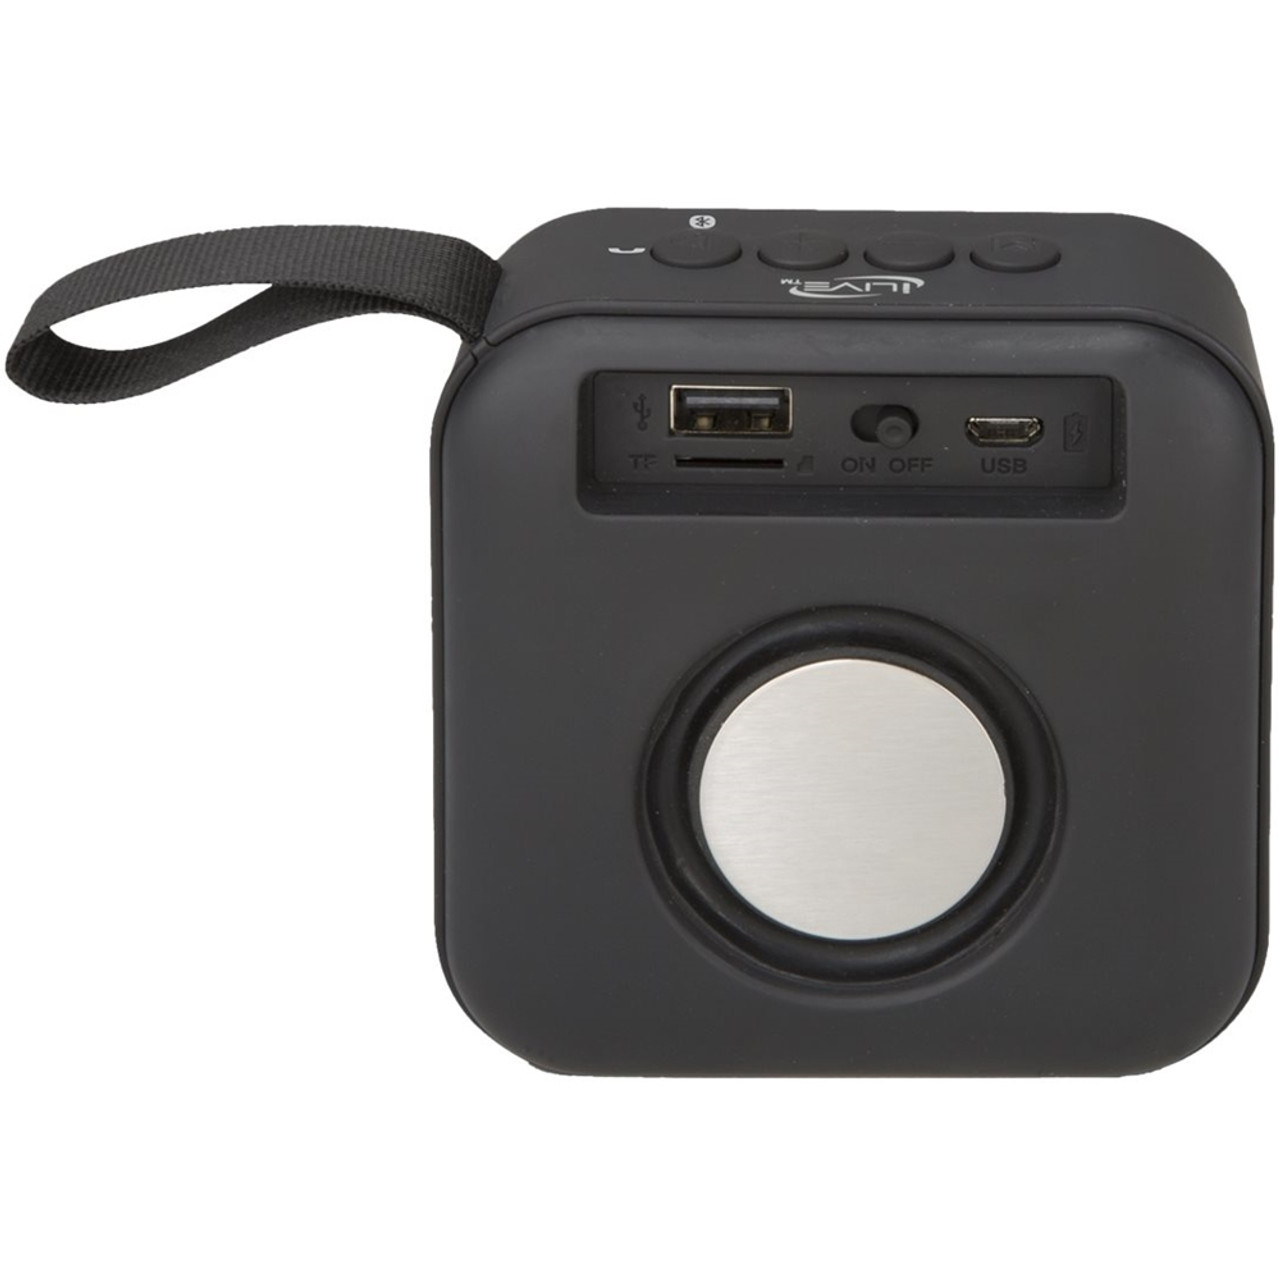 iLive - Portable Speaker - Black